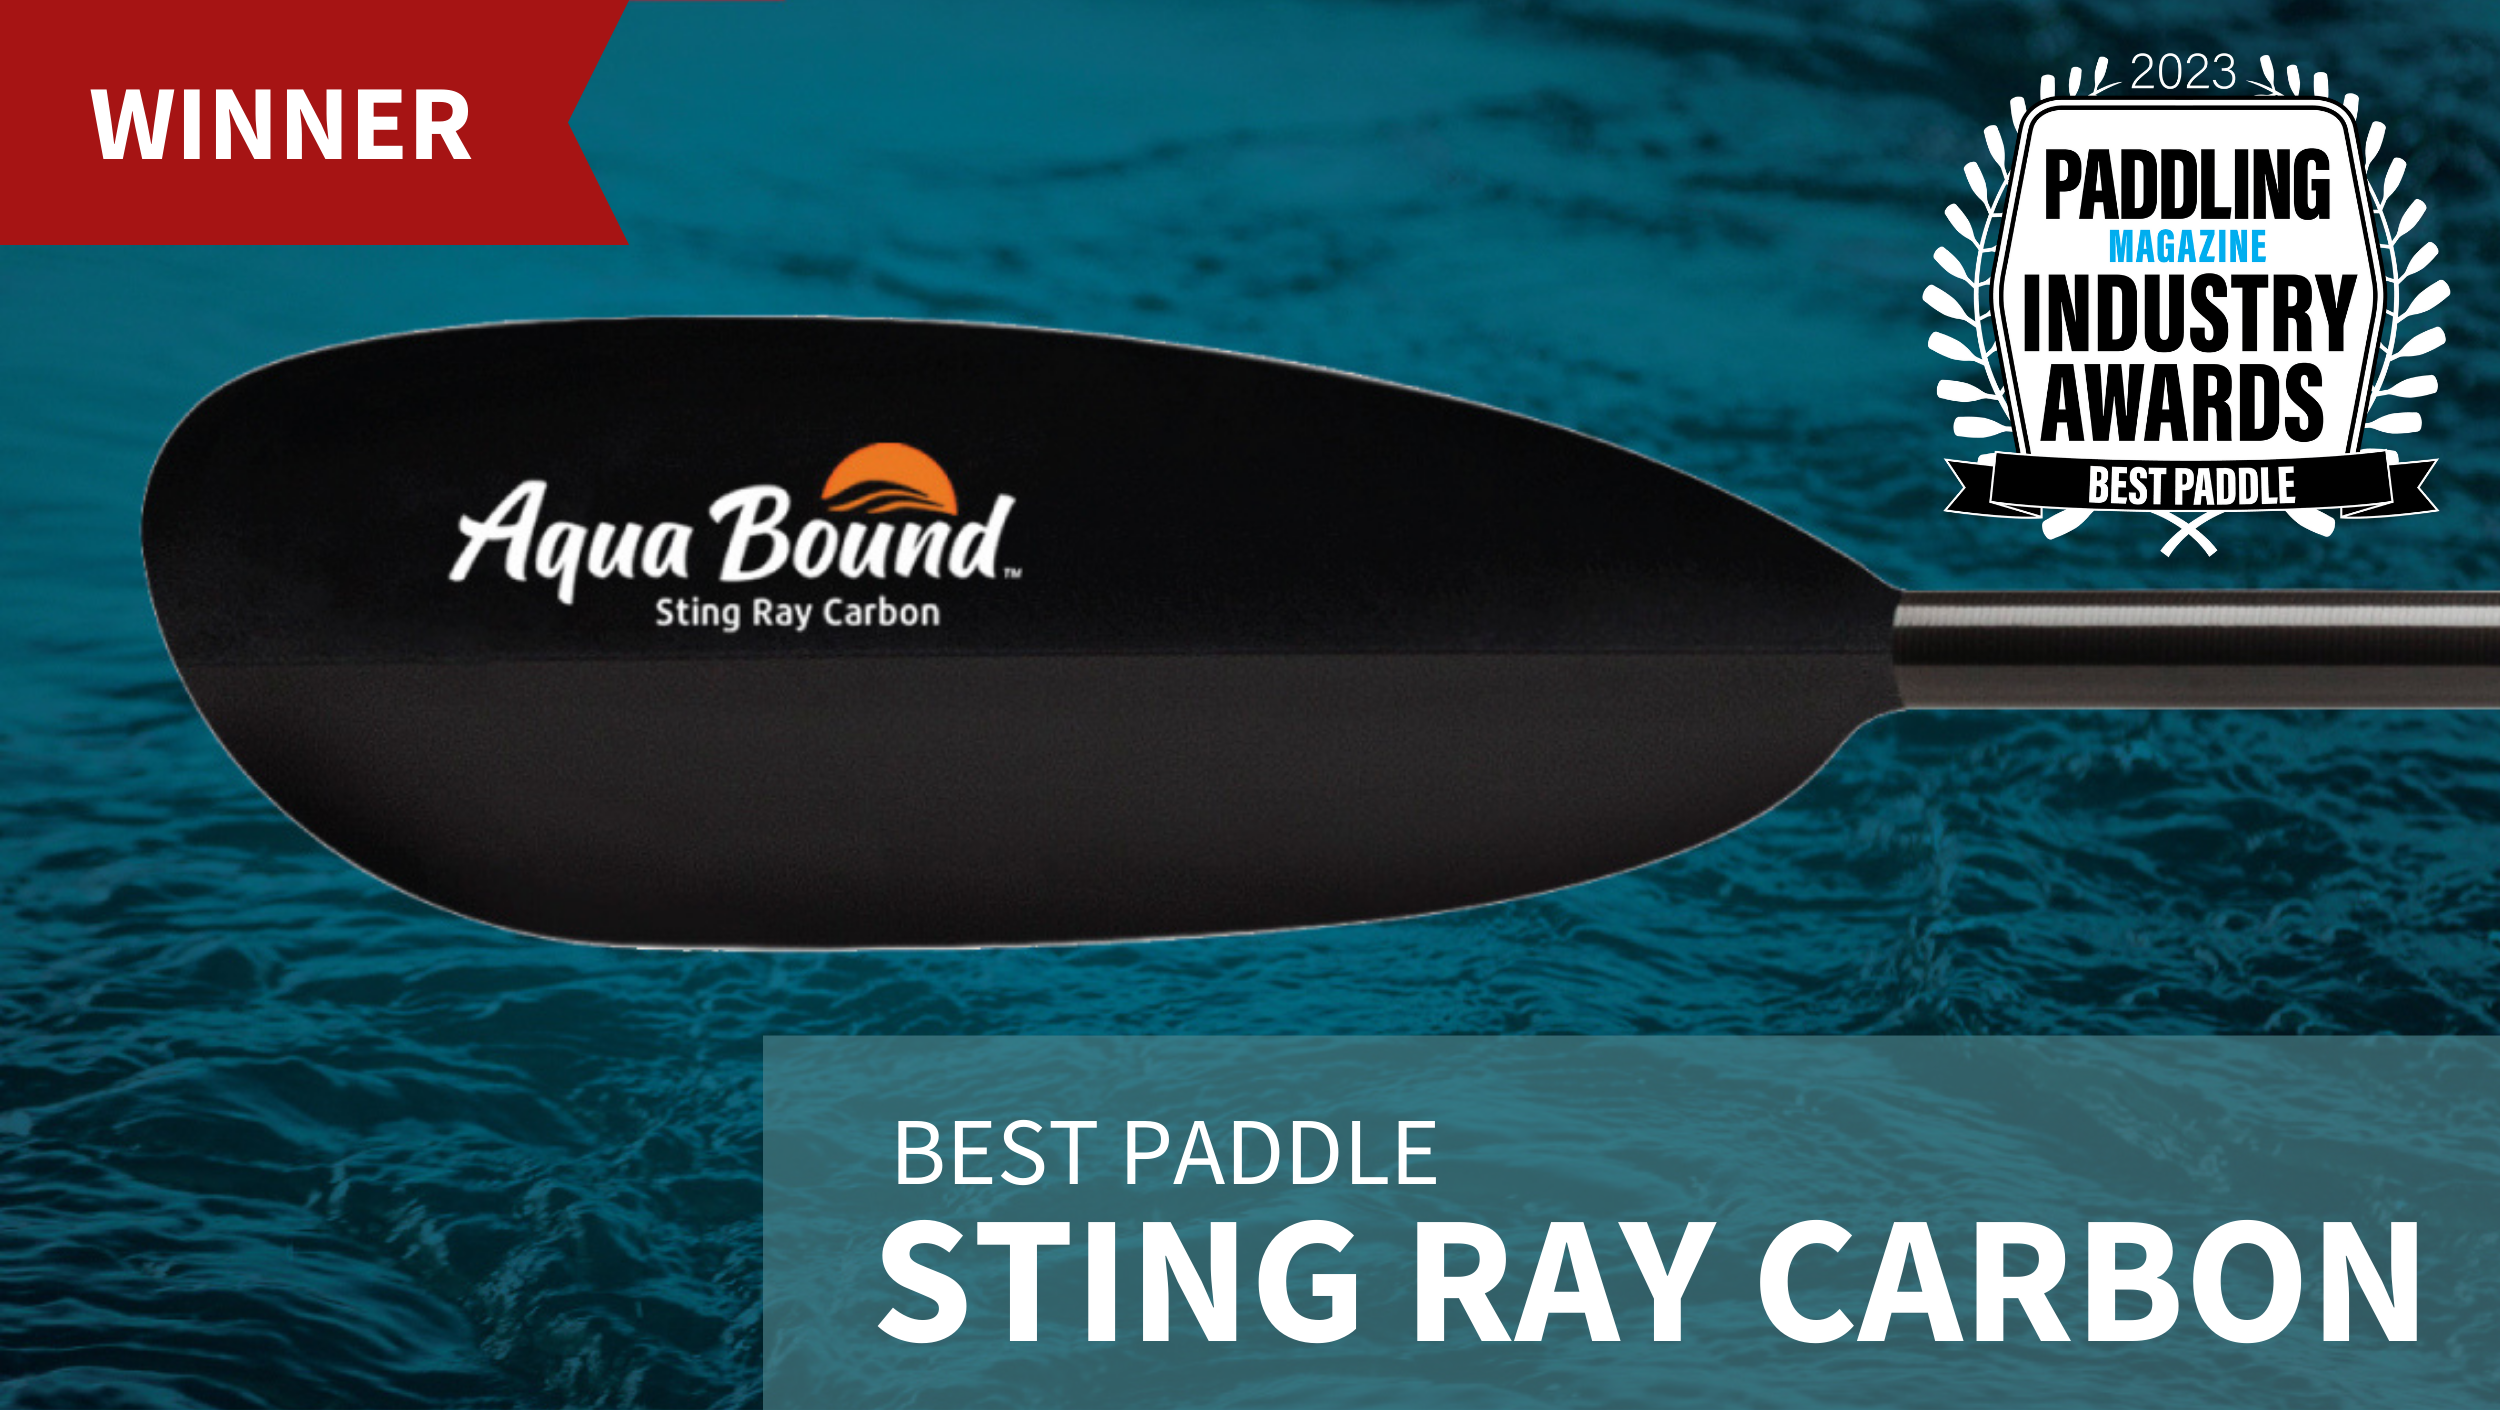 Paddling Industry Award: Best Paddle 2023